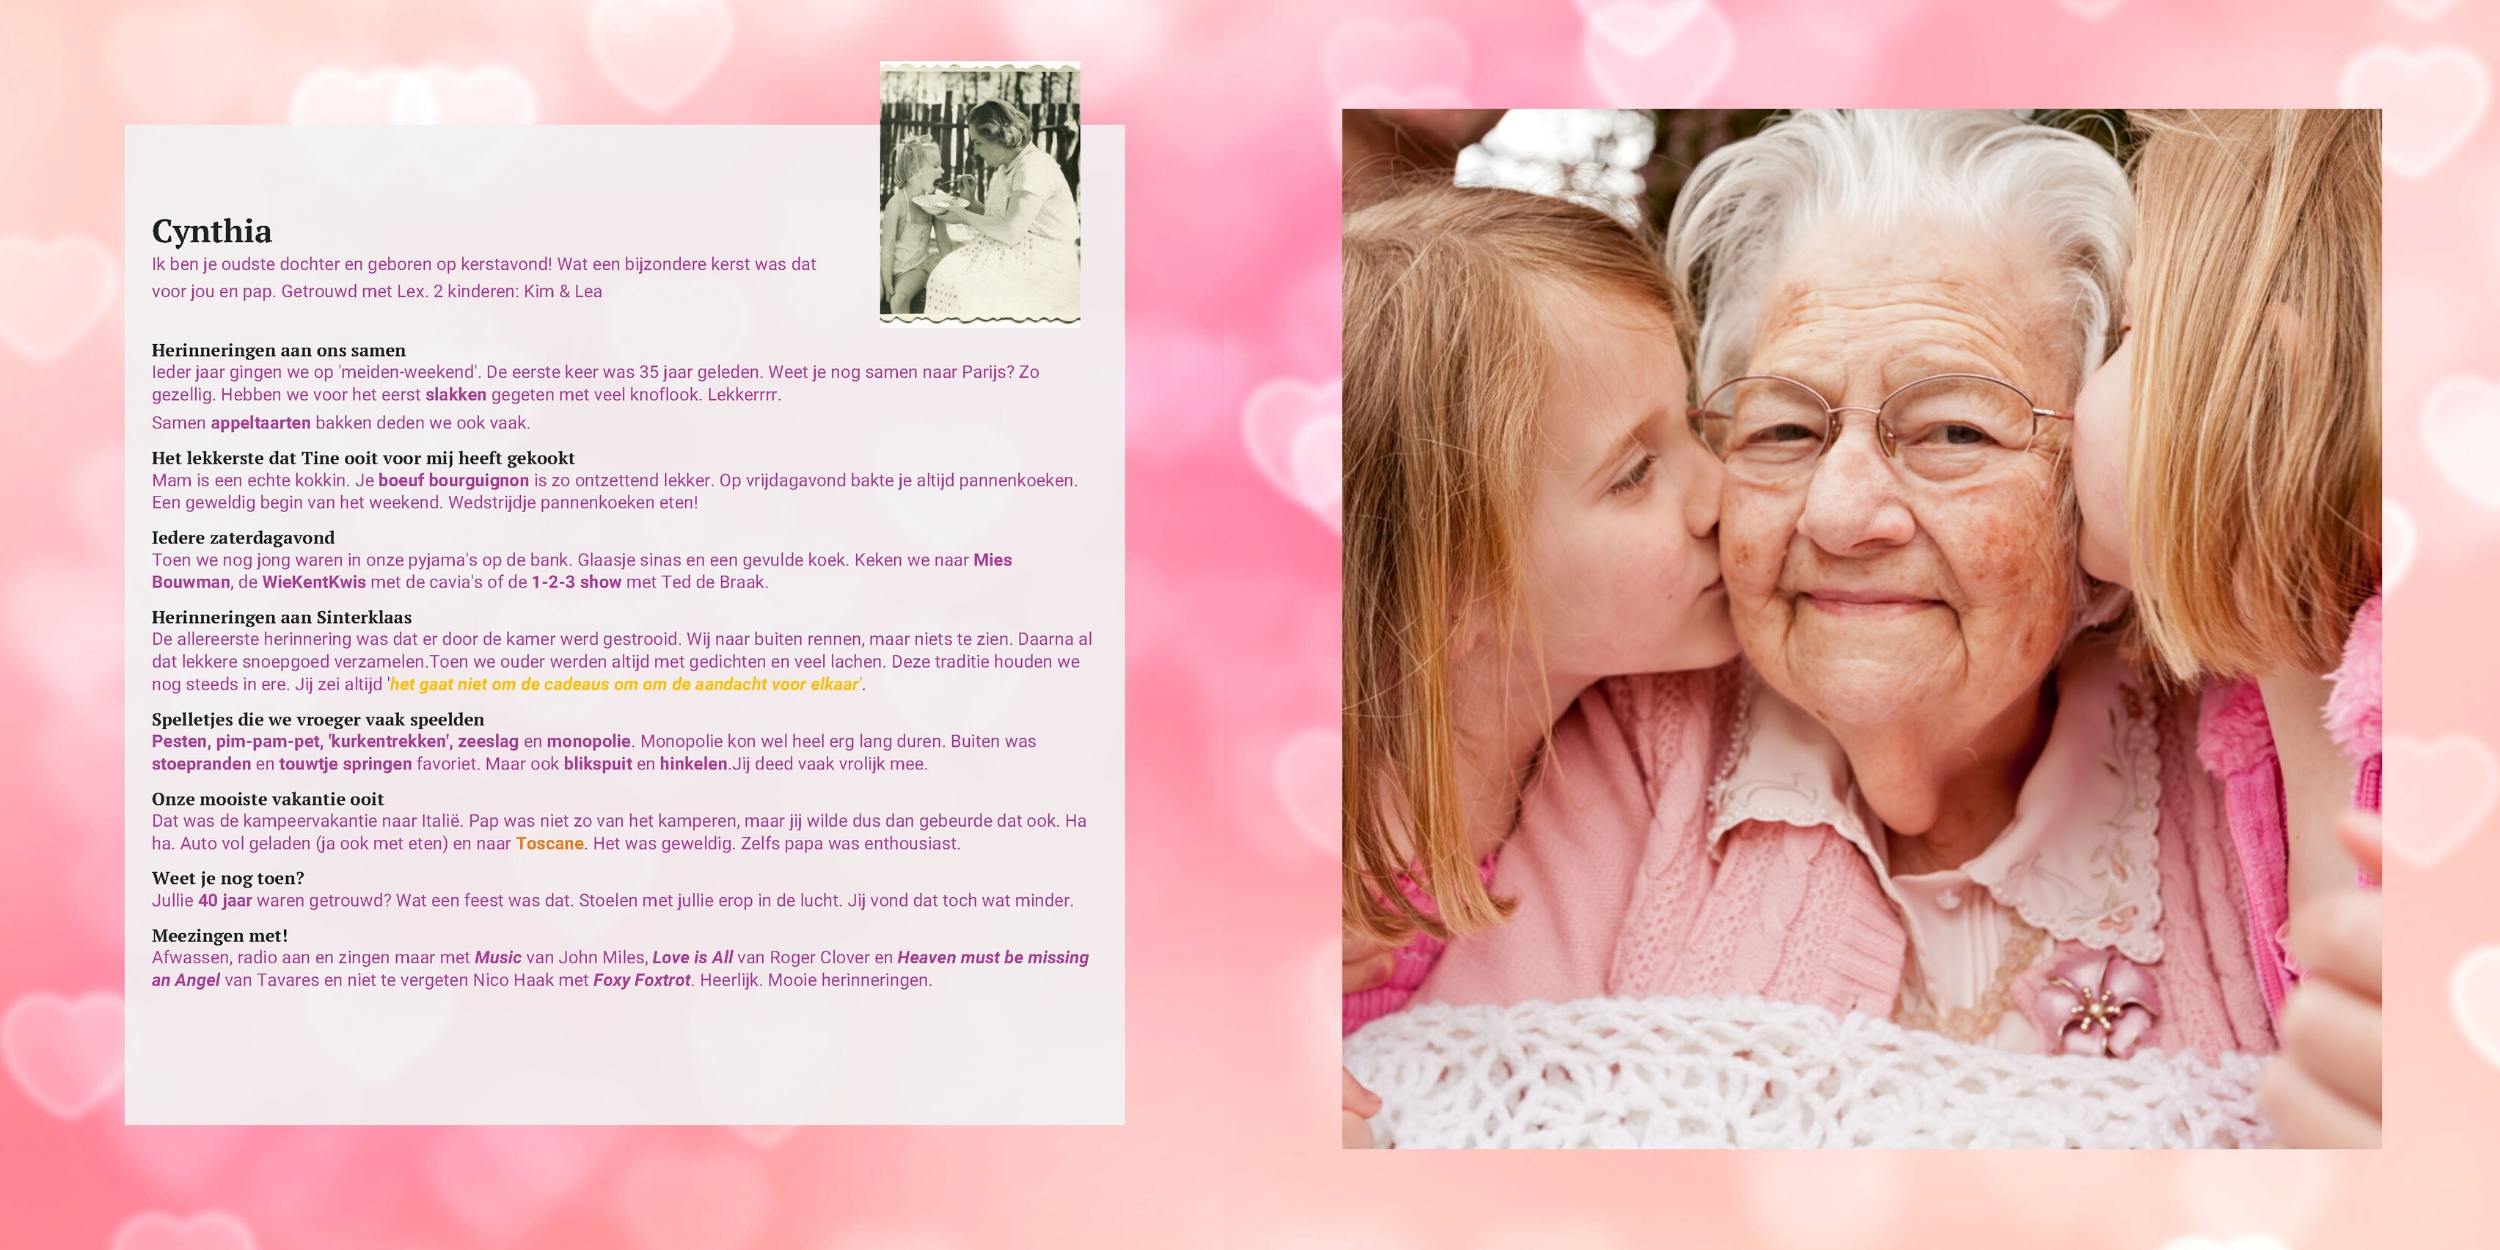 cadeau alzheimer dementie fotoboek vriendenboek